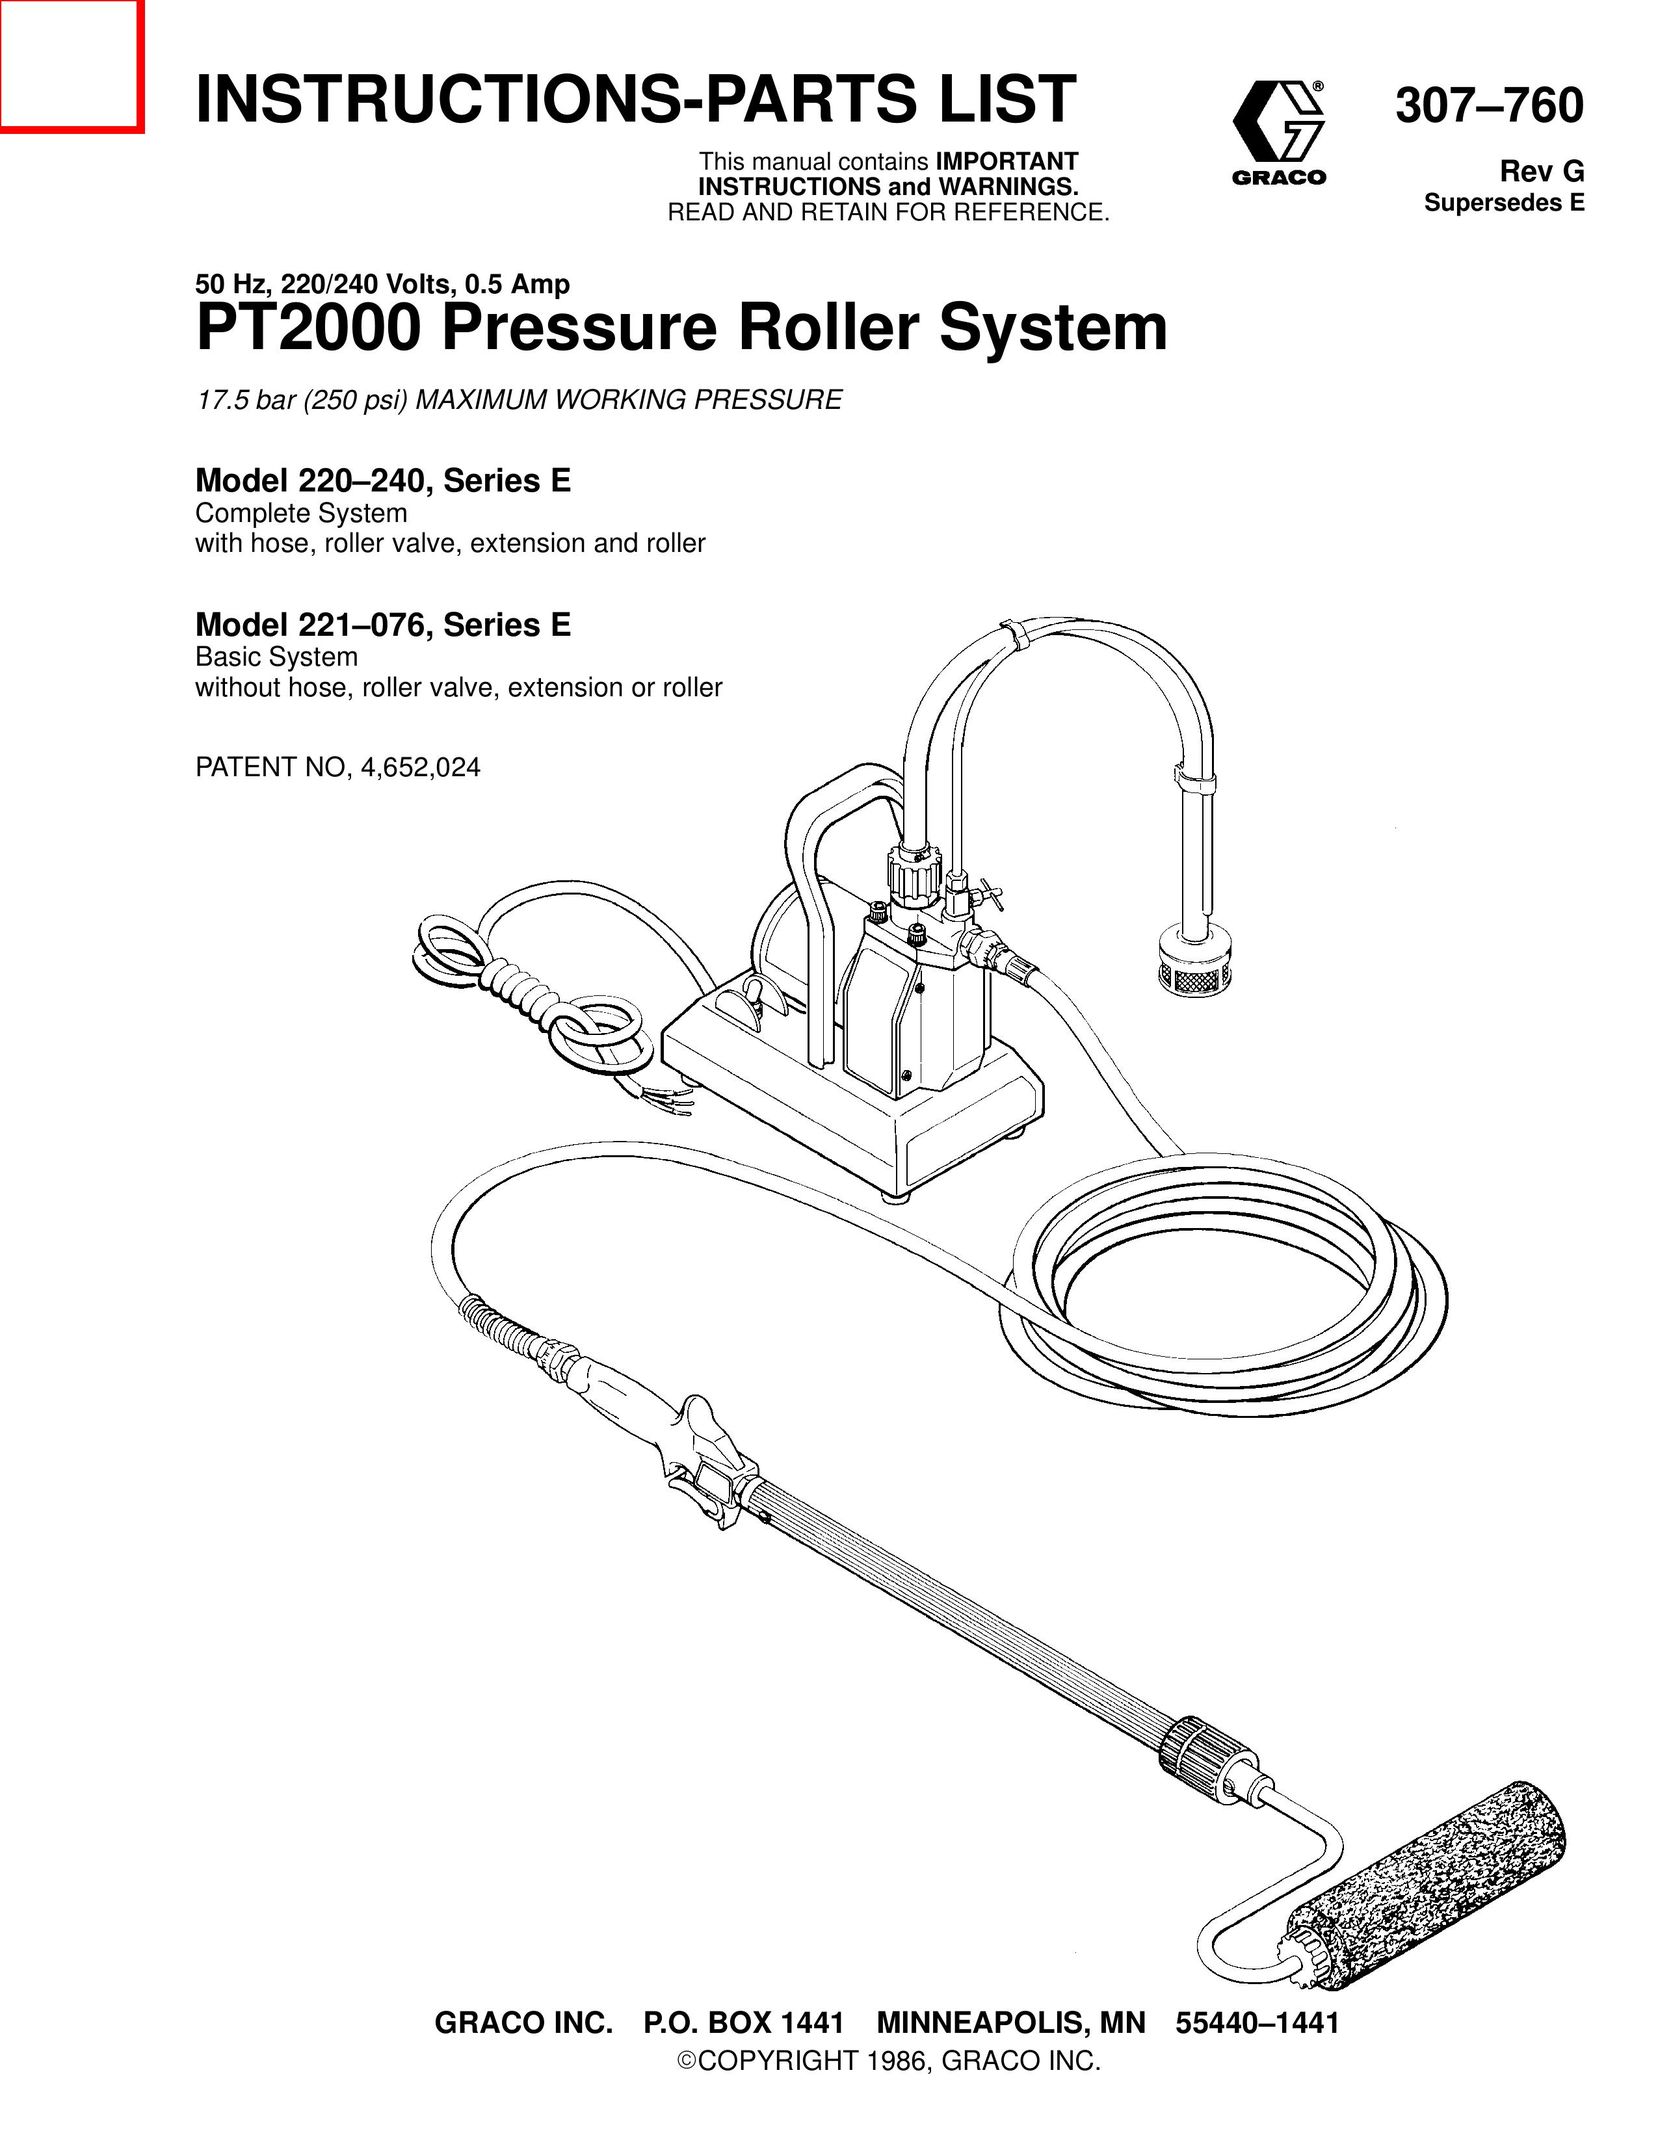 Graco Inc. 220240 Power Roller User Manual